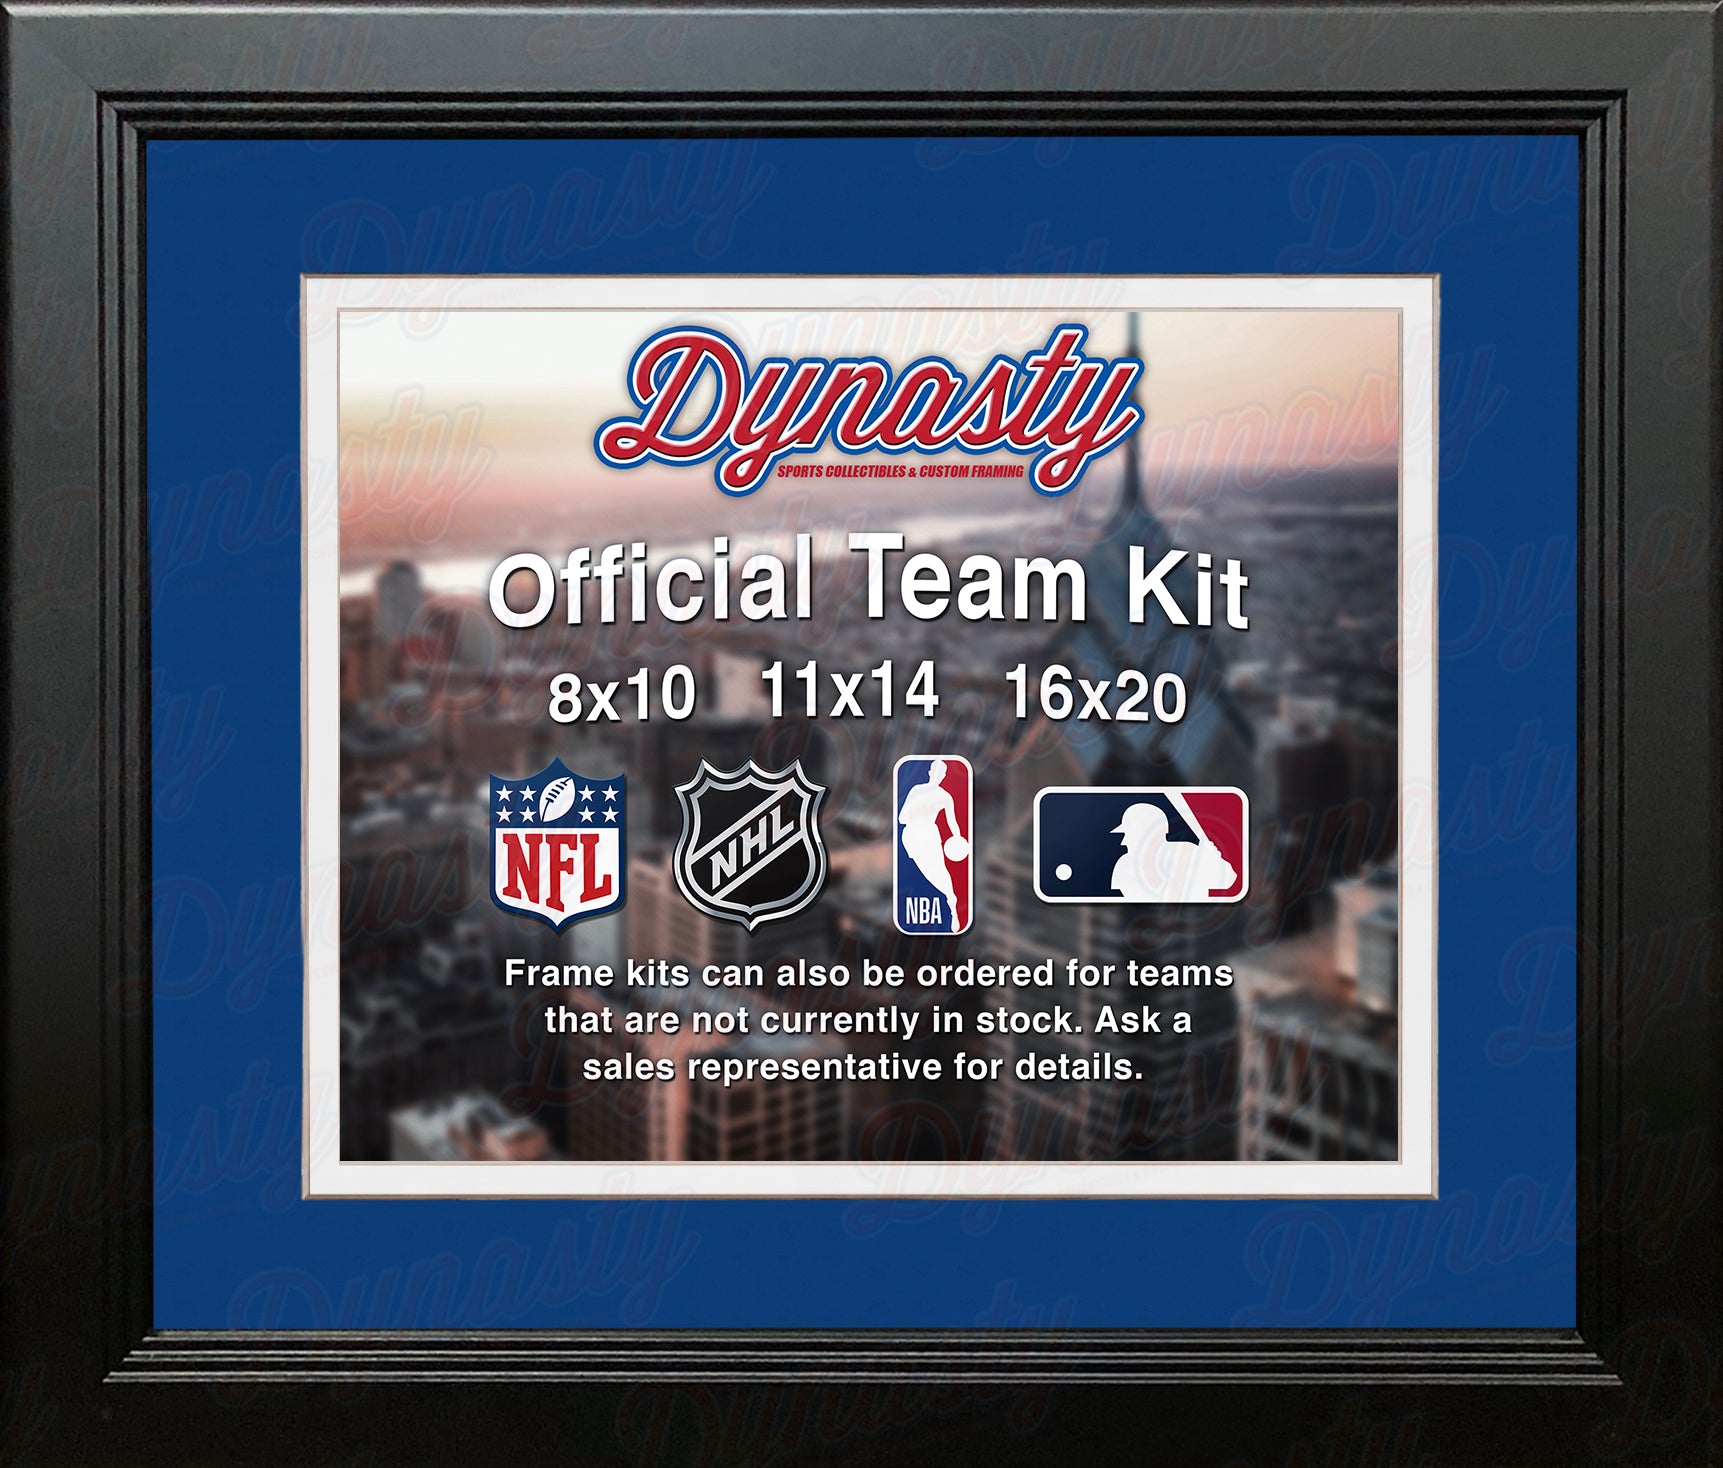 MLB Baseball Photo Picture Frame Kit - Kansas City Royals (Blue Matting, White Trim) - Dynasty Sports & Framing 